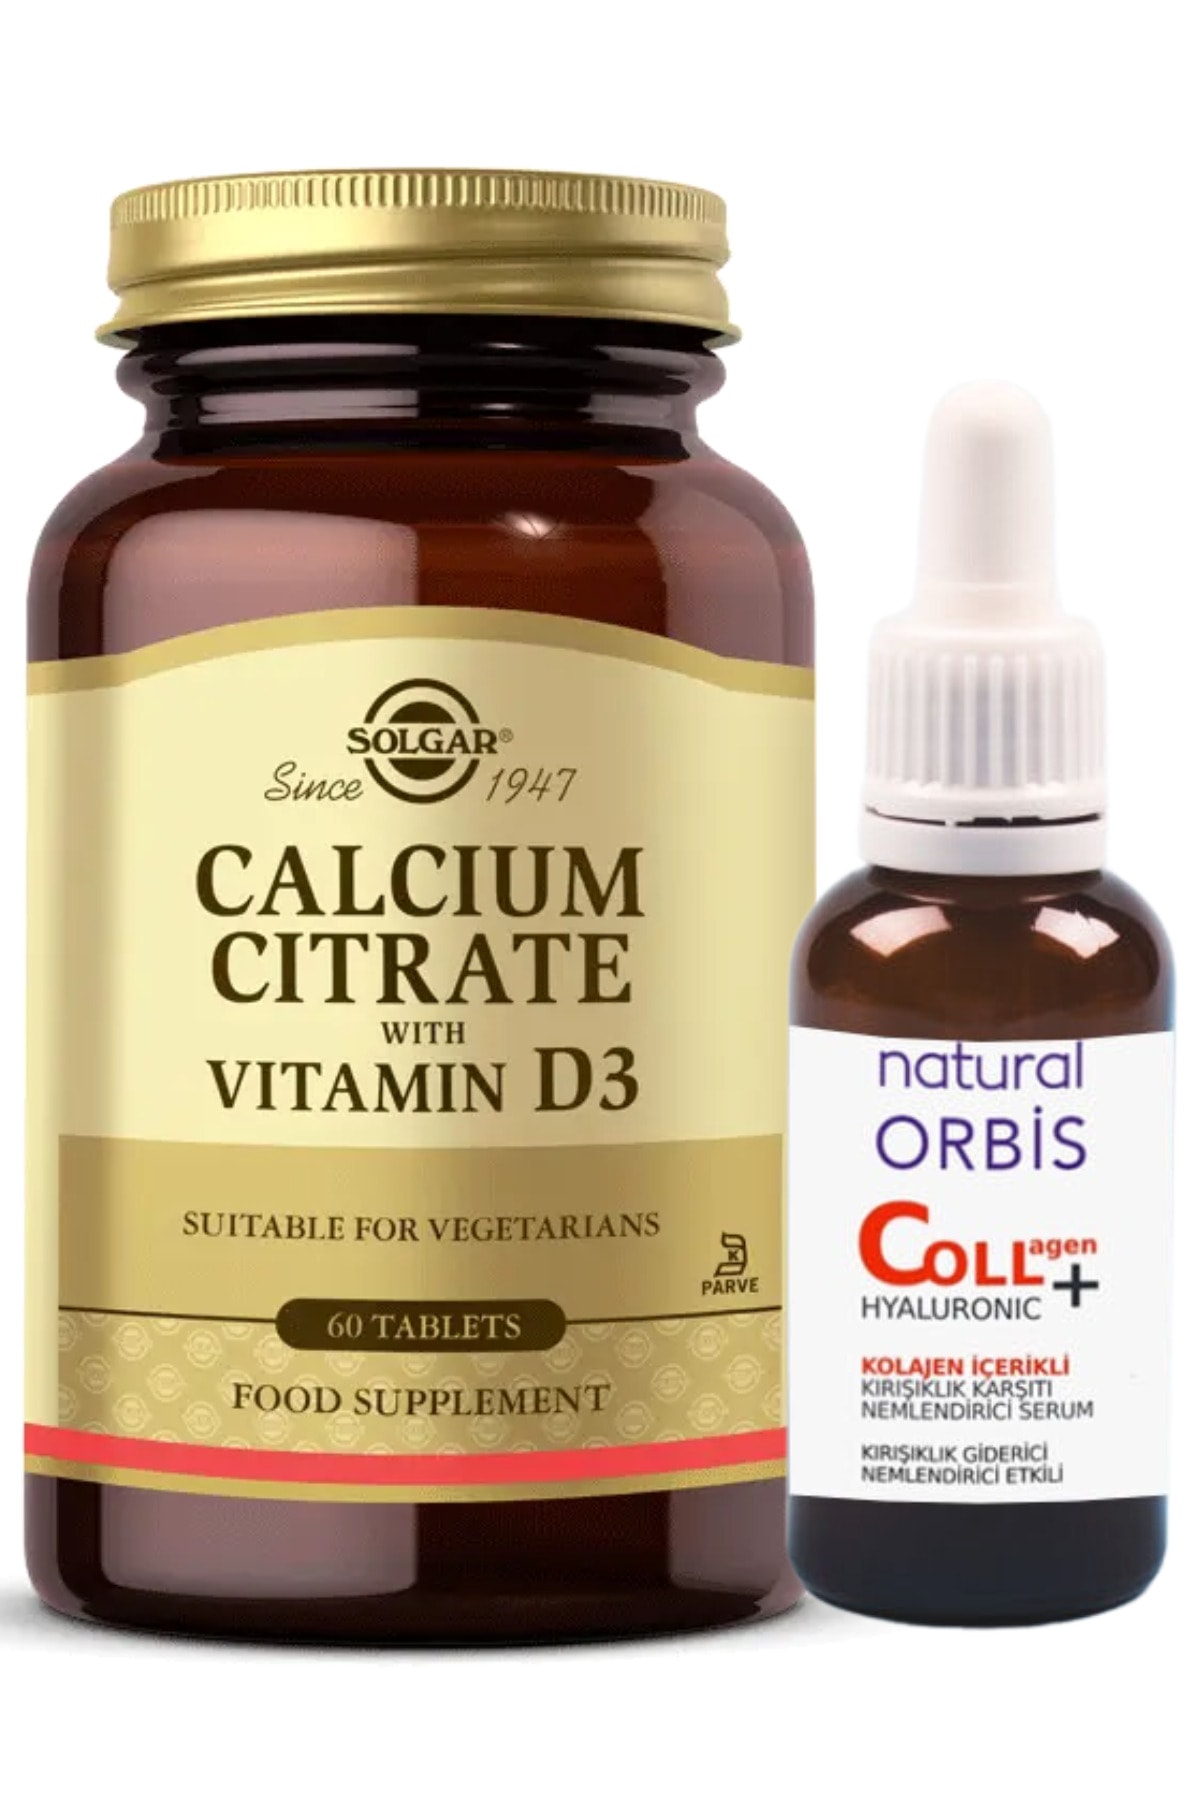 Solgar Calcium Citrate With Vitamin D3 60 Tablet (HEDIYE KOLAJEN SERUM 30 ML KALSİYUM SİTRAT) Skt:09/24 PG9717